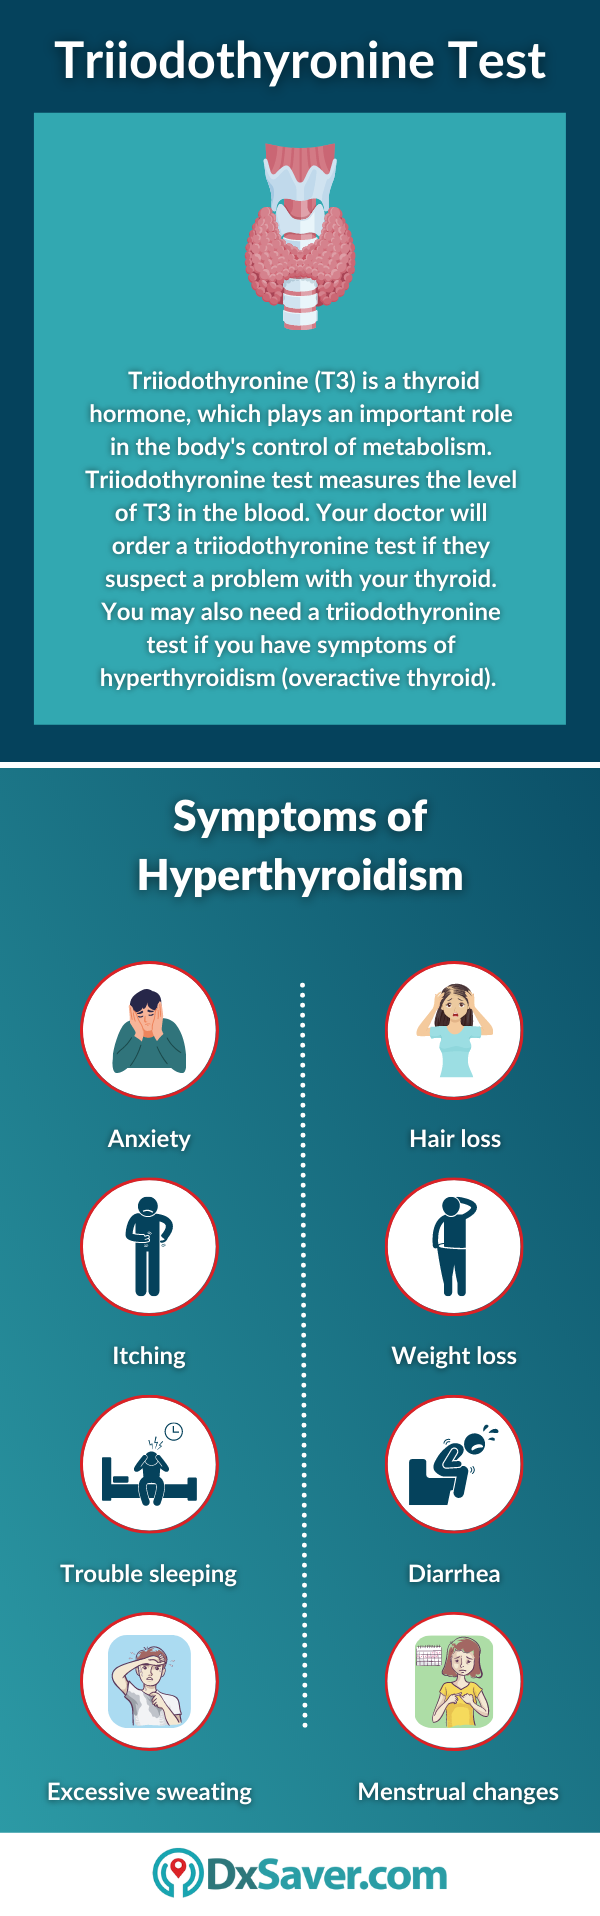 Triiodothyronine Test and Symptoms of Hyperthyroidism